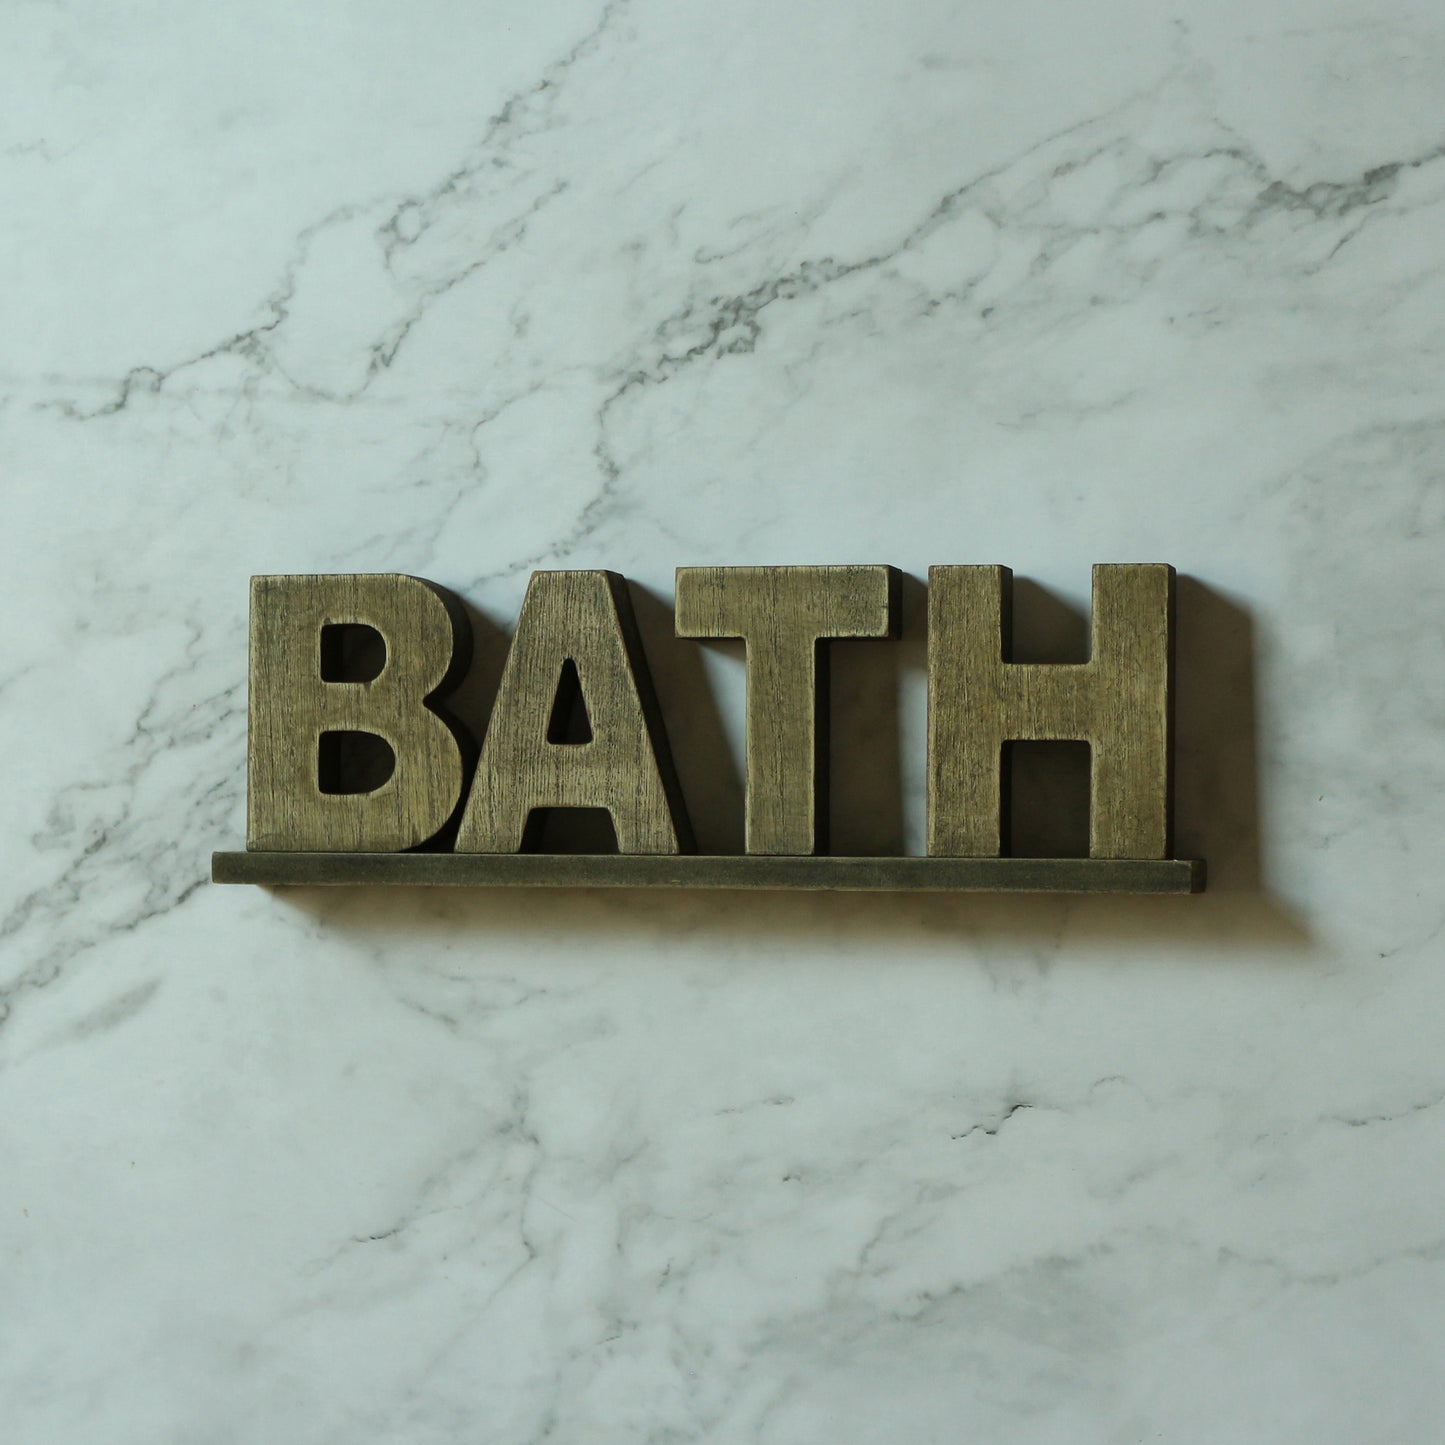 CVHOMEDECO. Rustic Vintage Wooden Words Sign Free Standing Bath, Bathroom/Home Wall/Door Decoration Art (Natural 1)